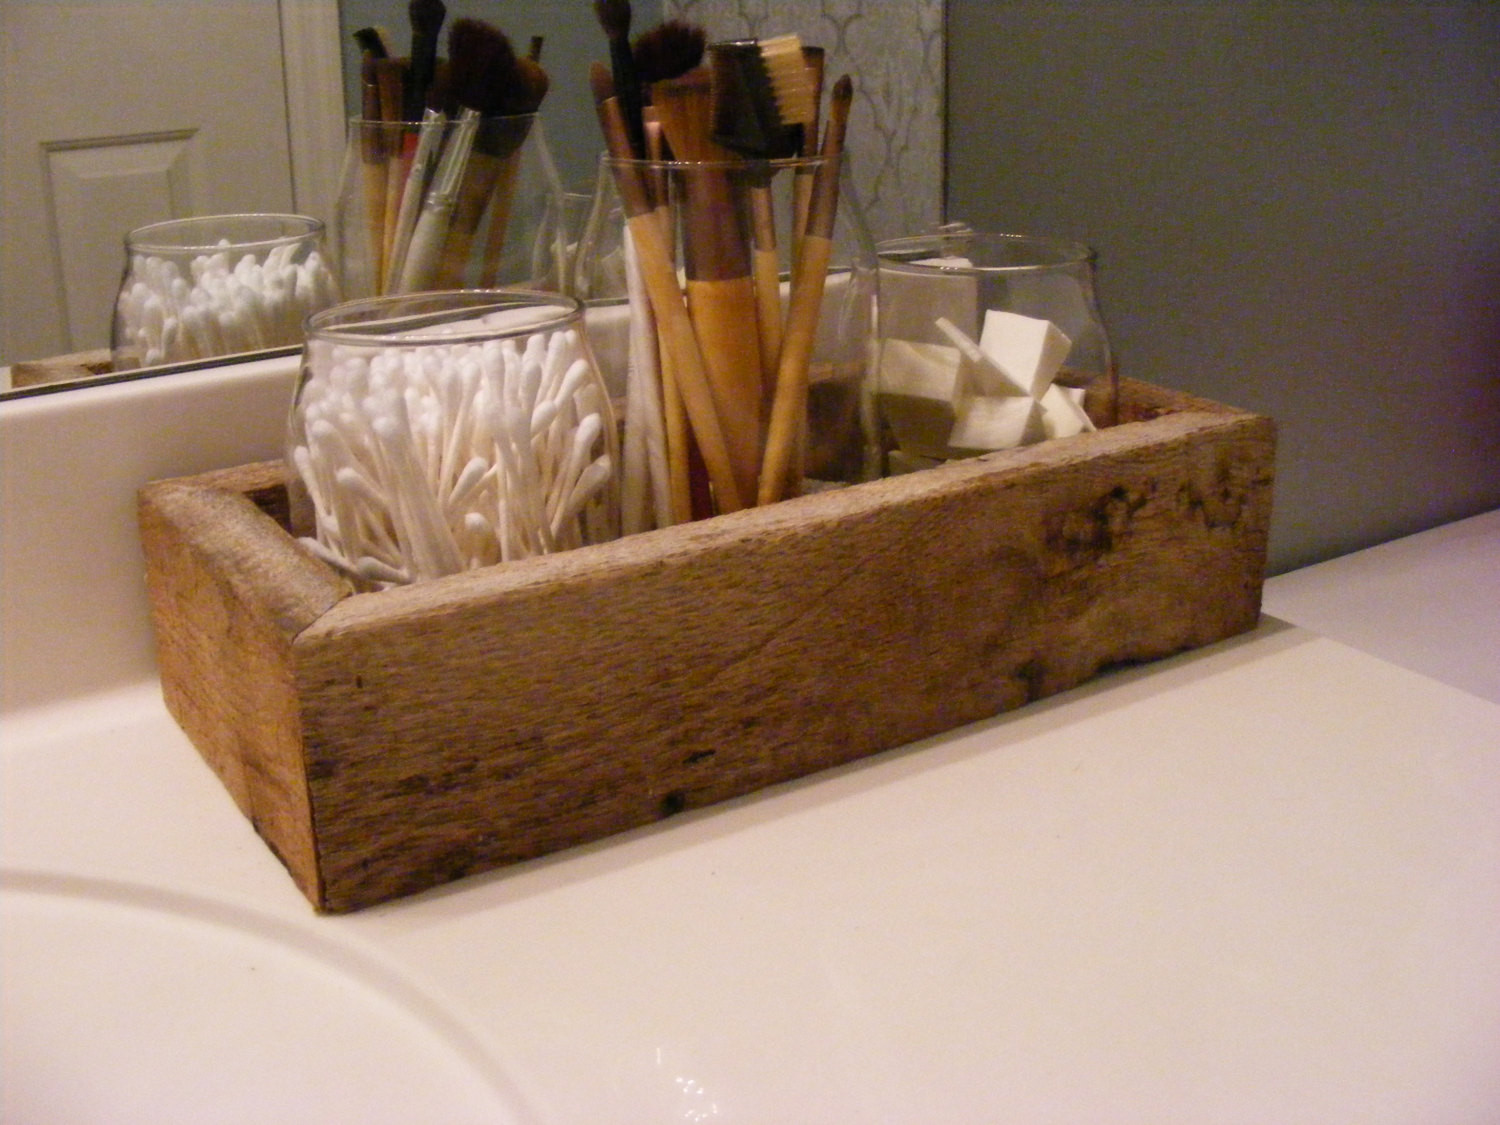 Best ideas about Rustic Bathroom Accessory
. Save or Pin Barnwood Bathroom Organizer Rustic Bathroom Decor Rustic Now.